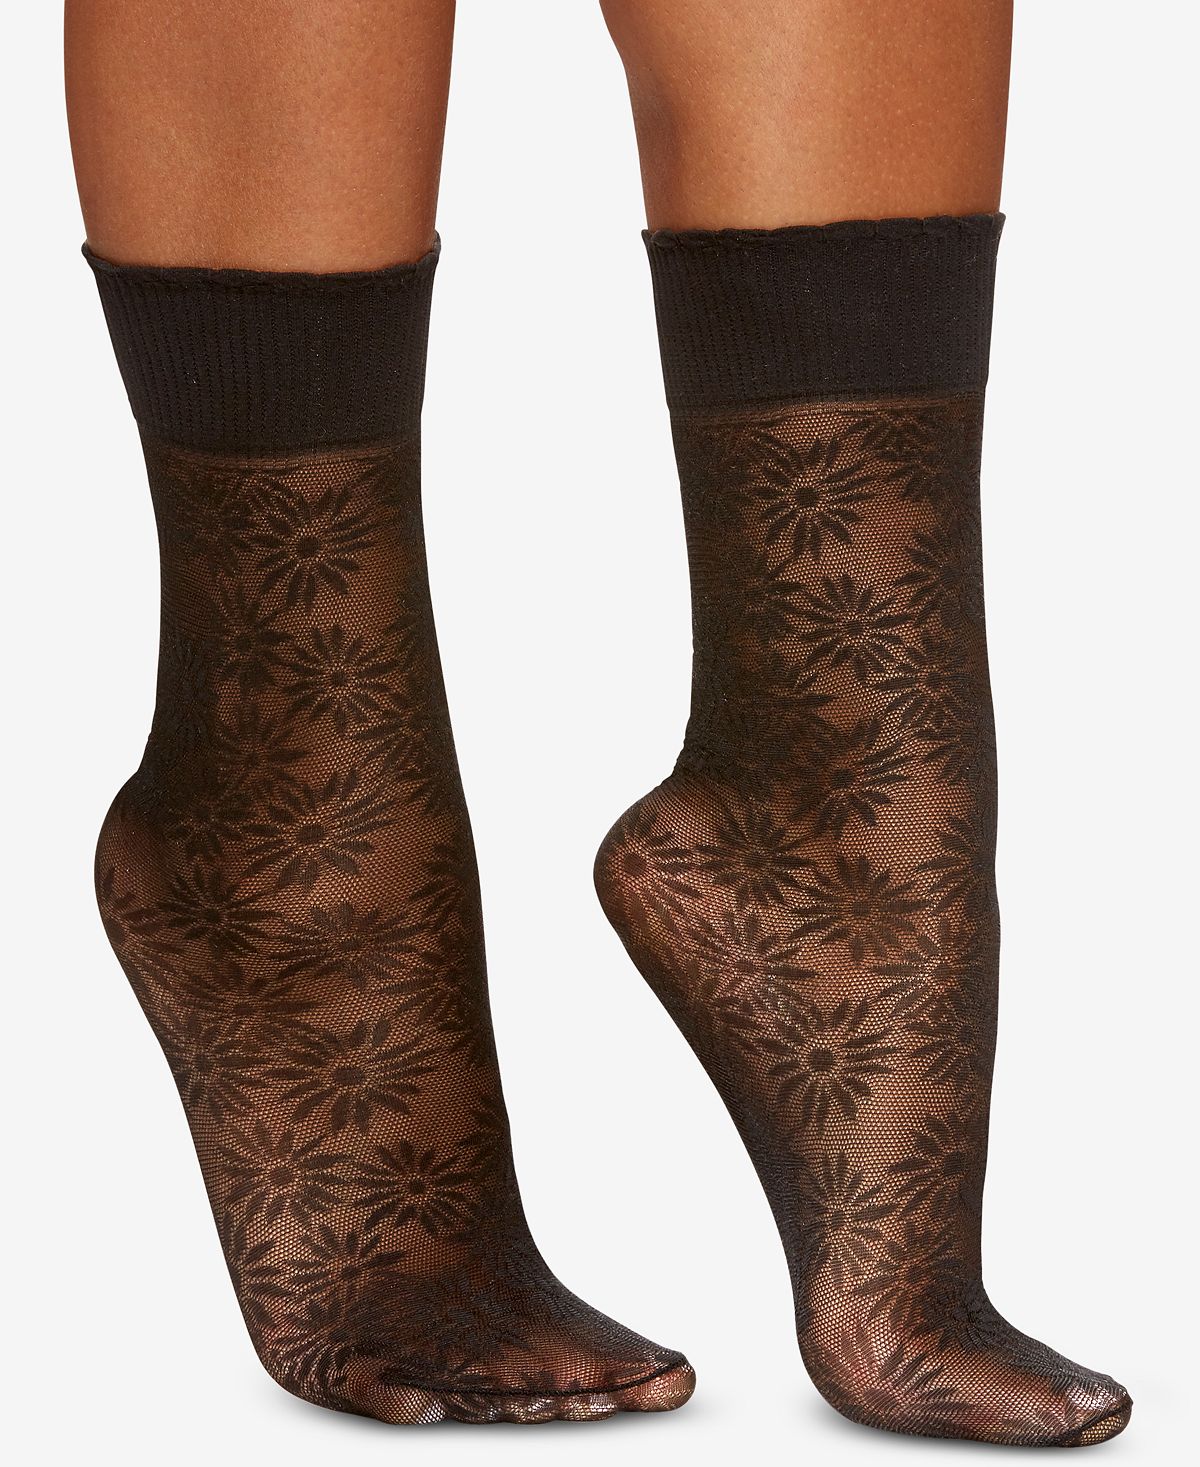 Berkshire Wo Daisy Floral Anklet Socks 5119 Black